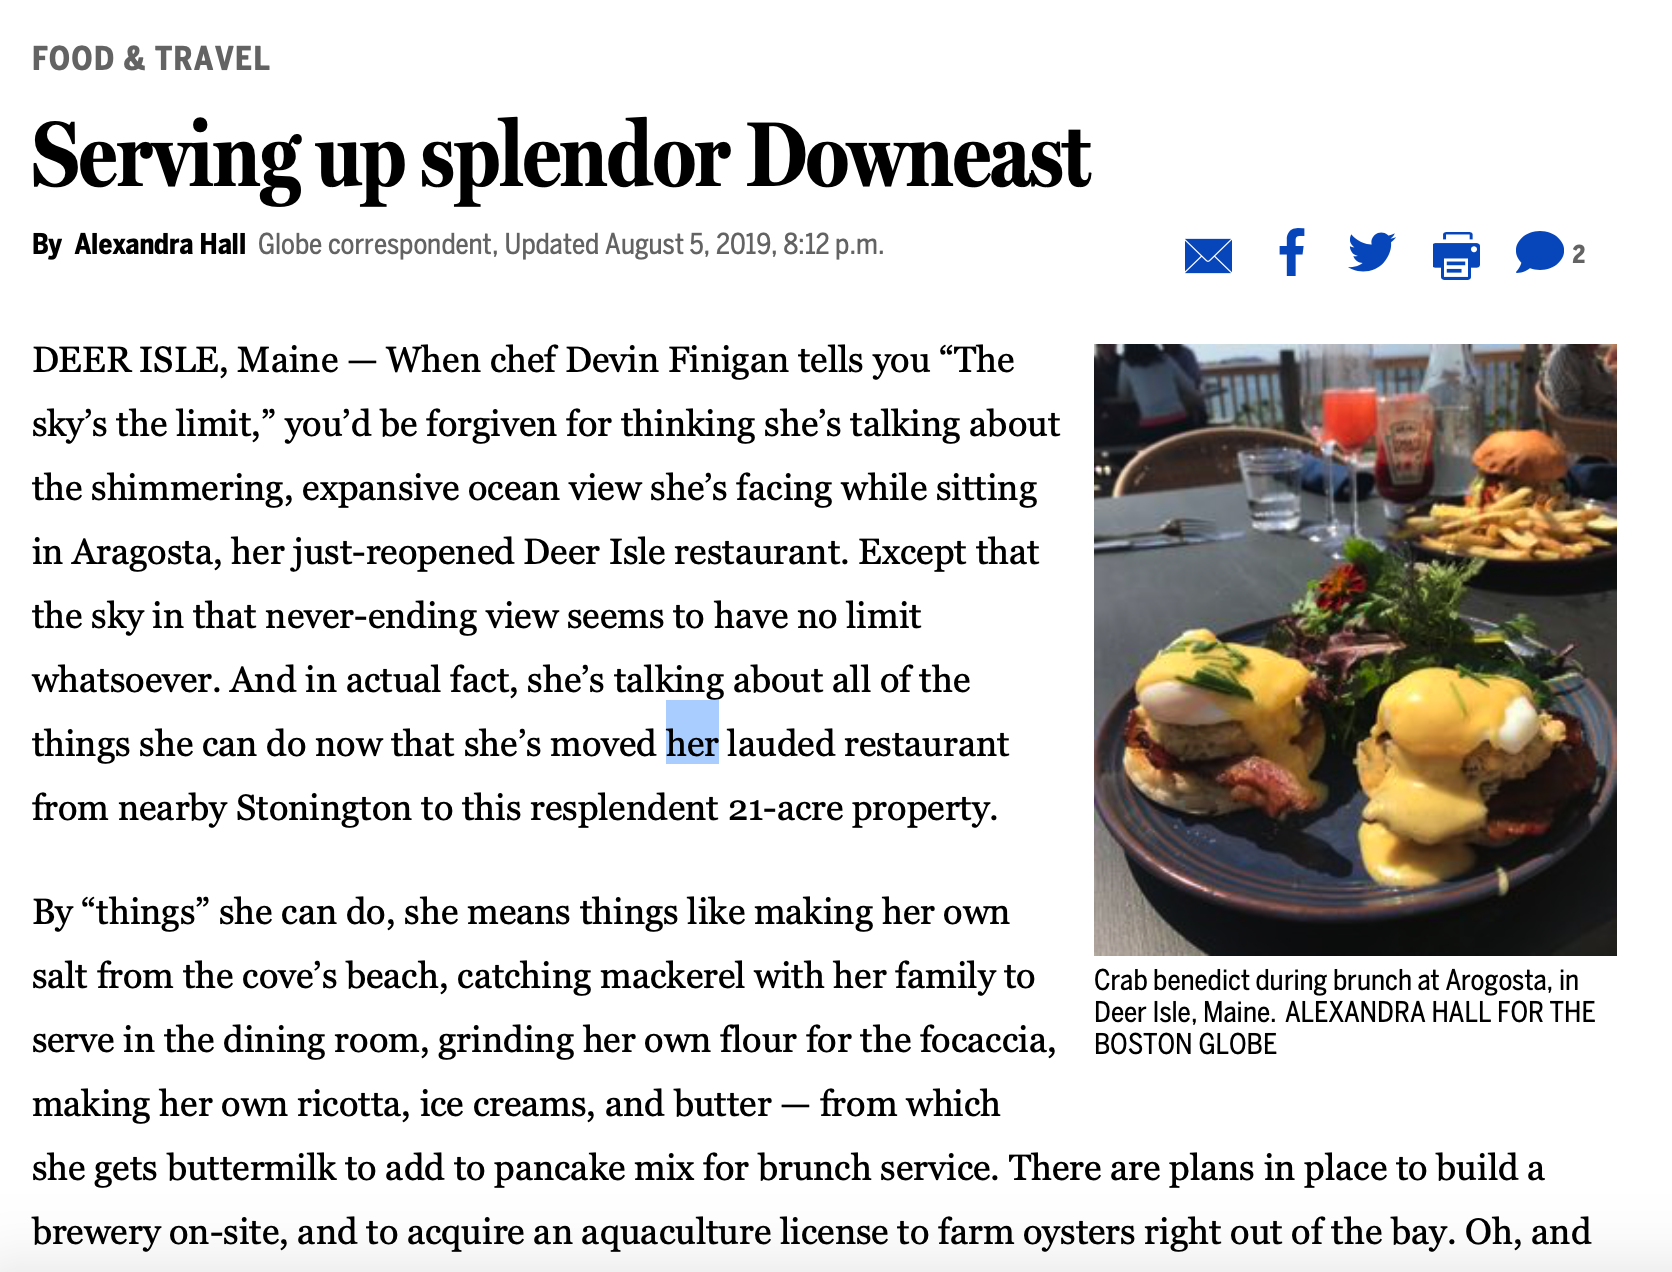 Splendor DownEast The Boston Globe 8/19